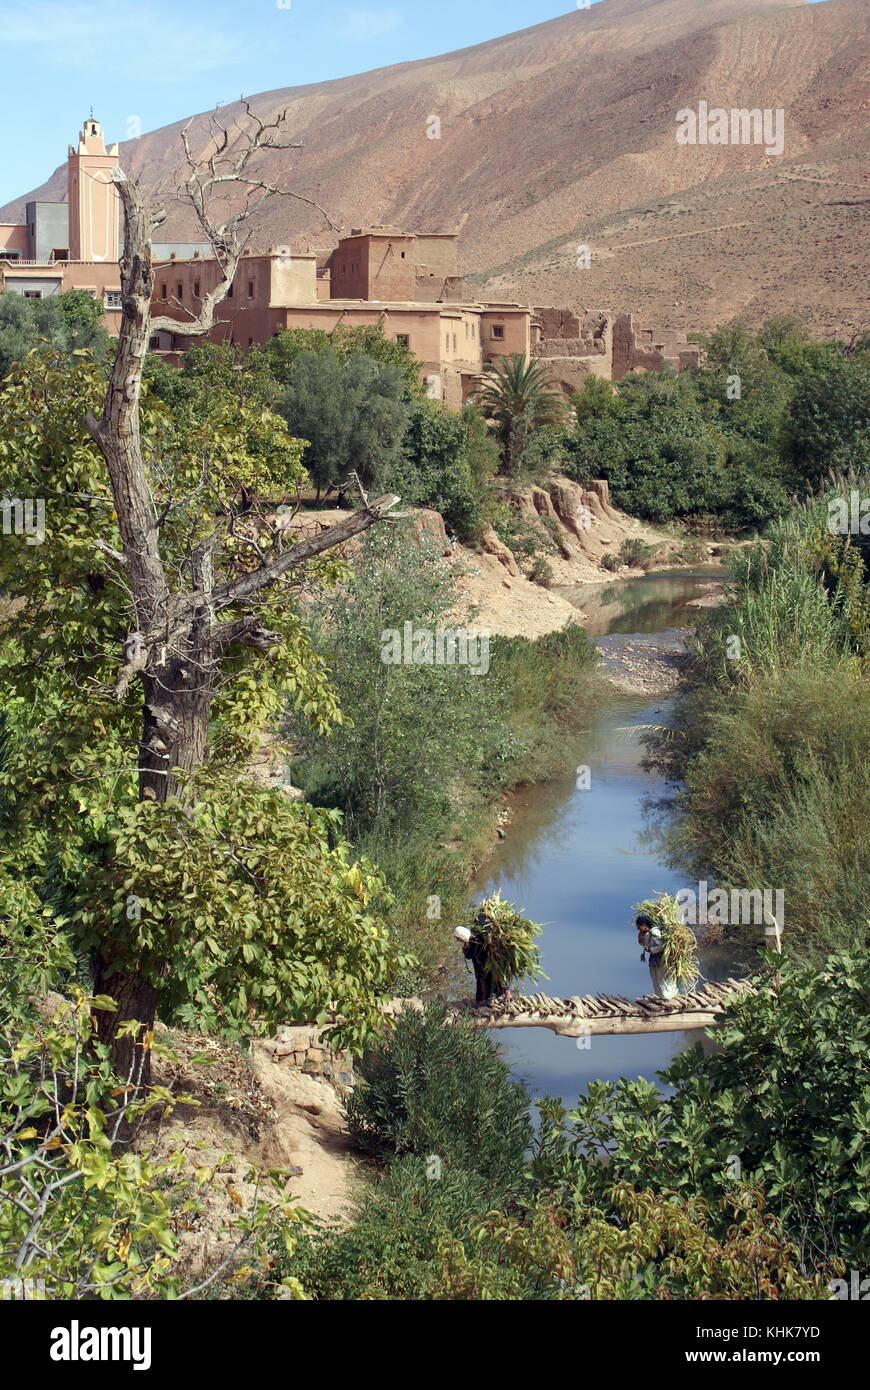 Two women on the bridge in village, Bulman Dodes, Morocco Stock Photo